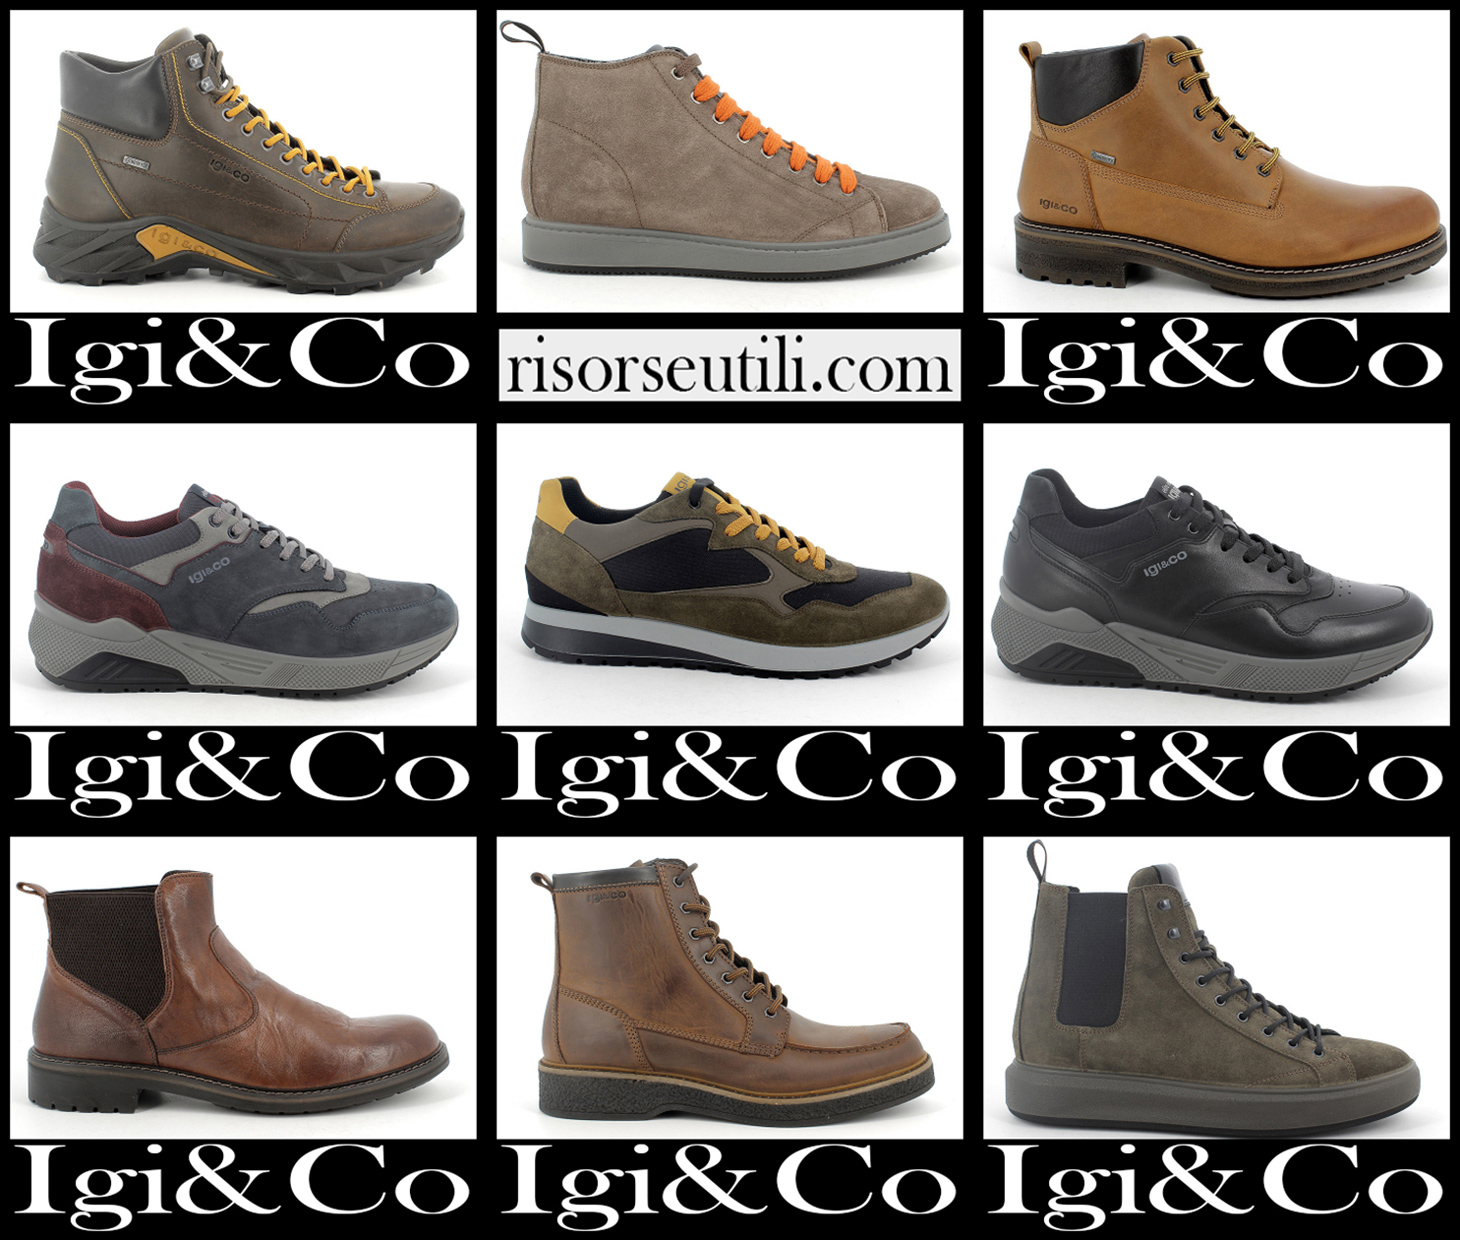 New arrivals IgiCo shoes 2022 mens footwear